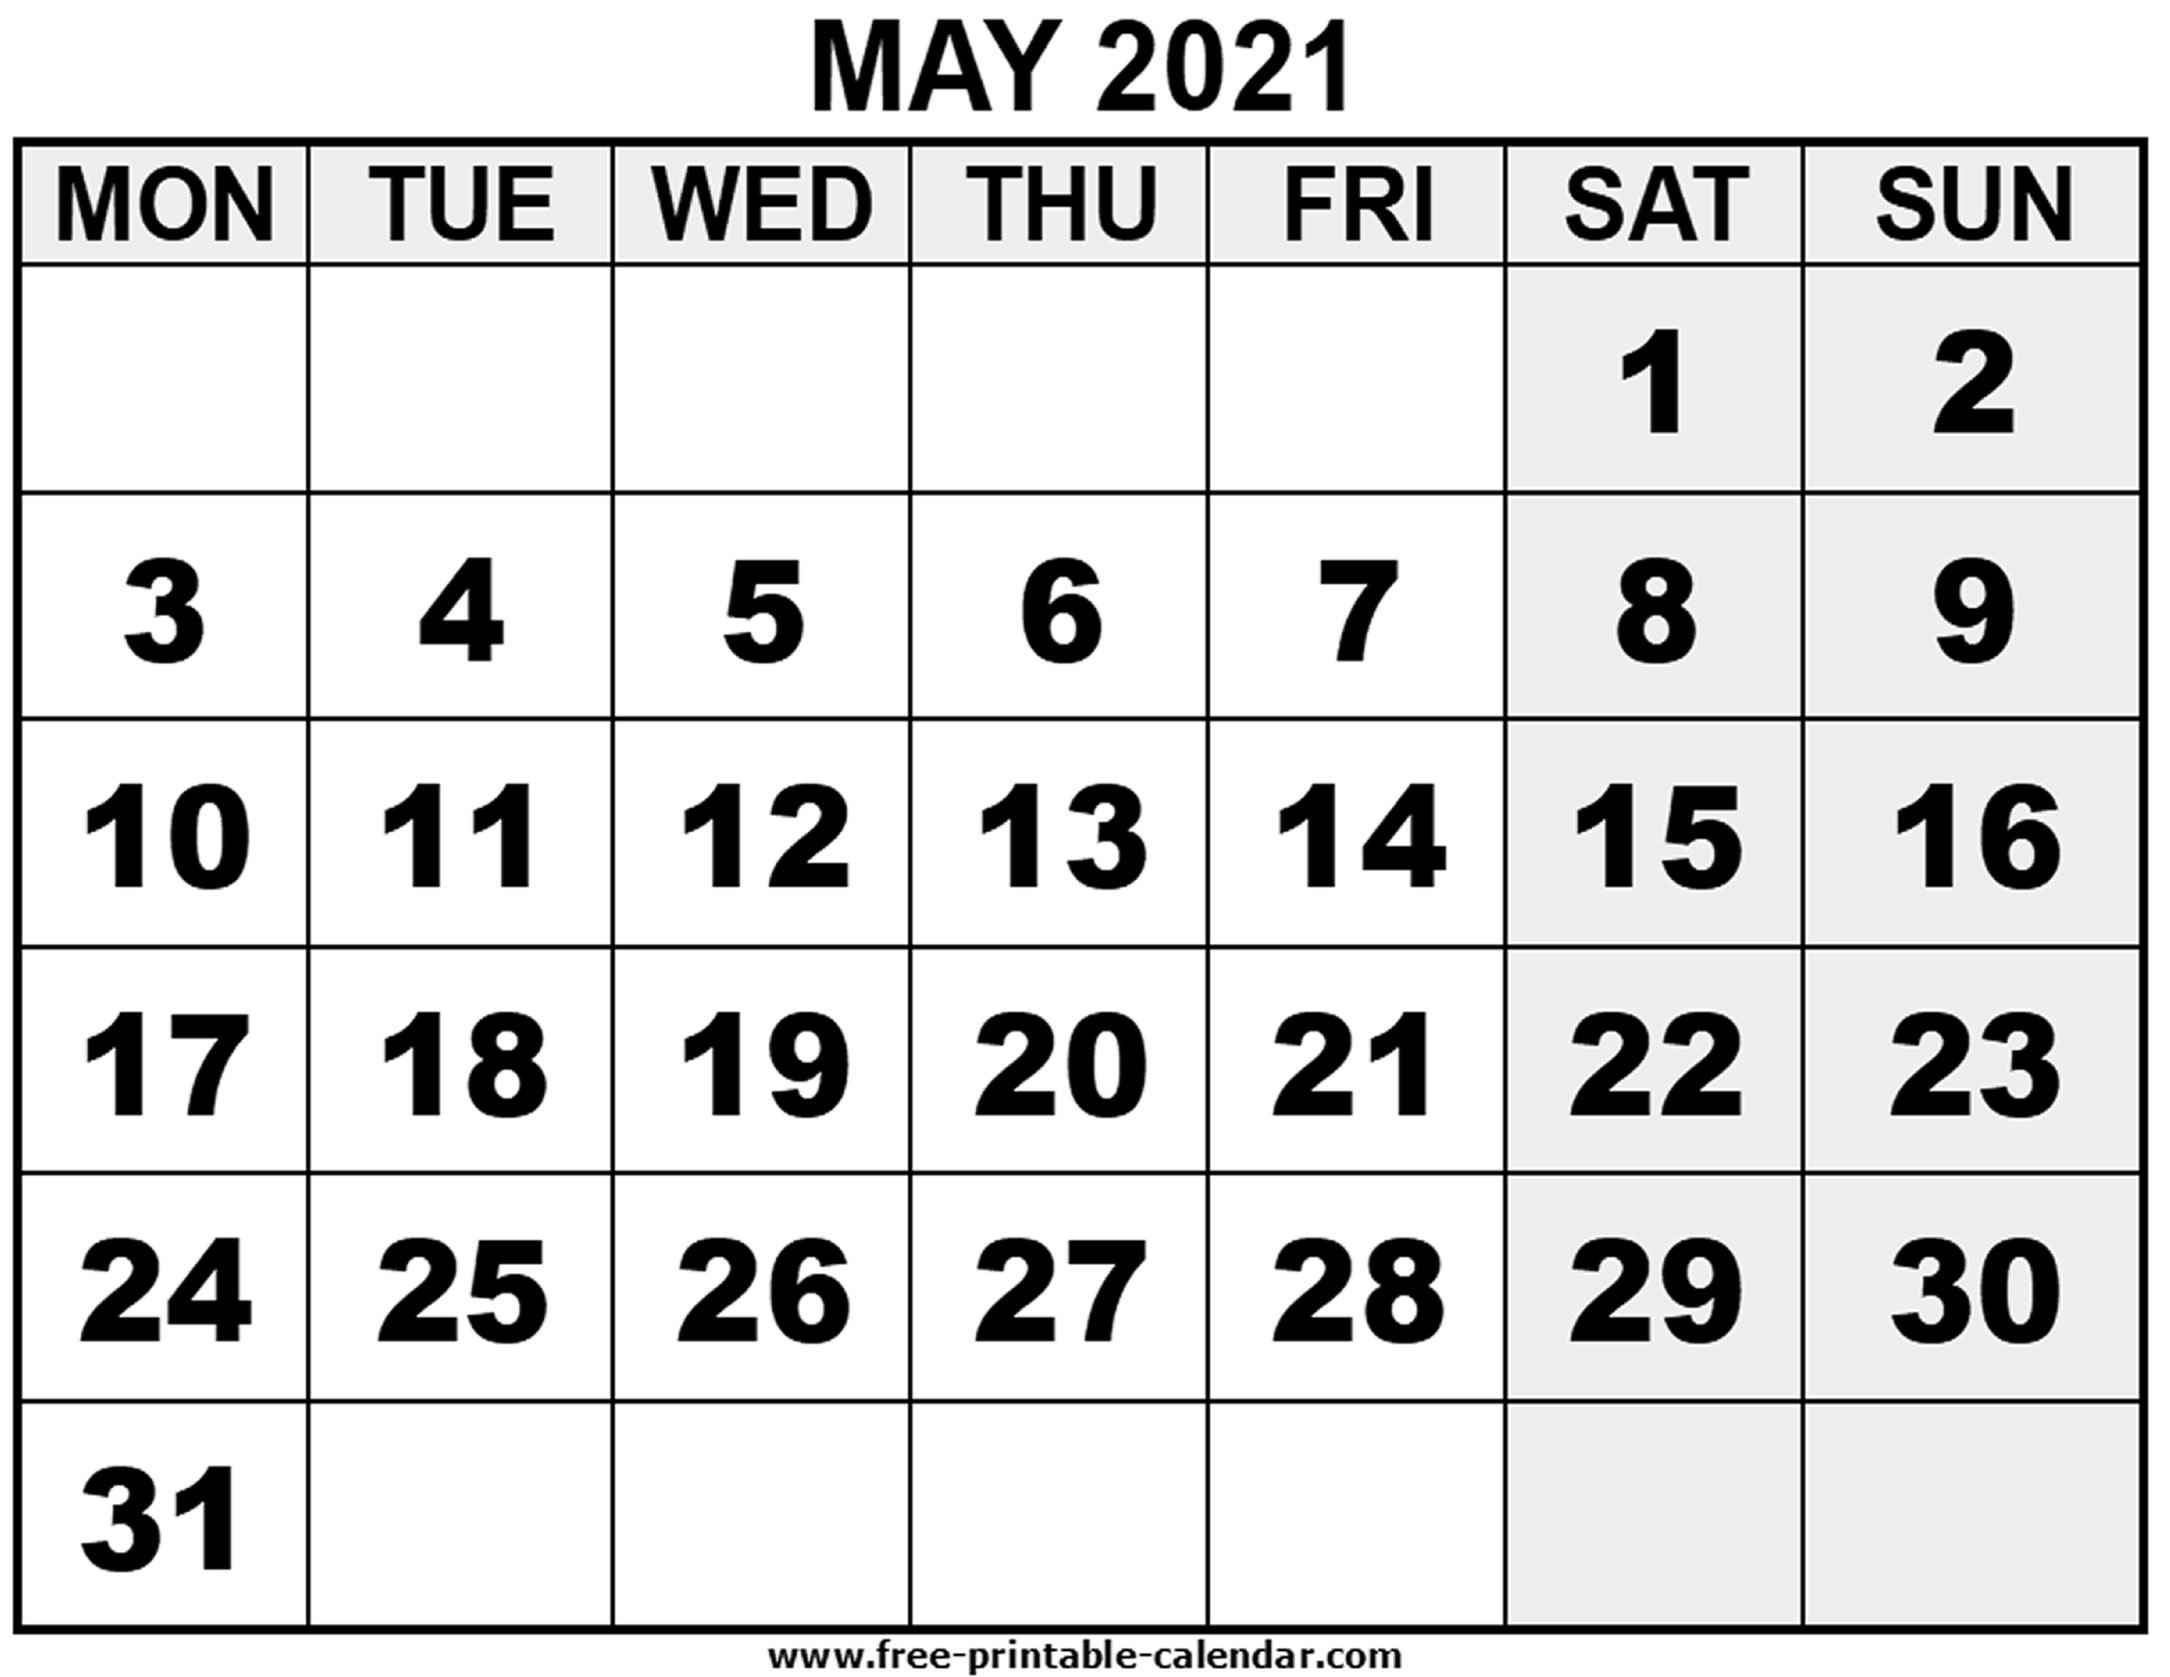 2021 May - Free-Printable-Calendar